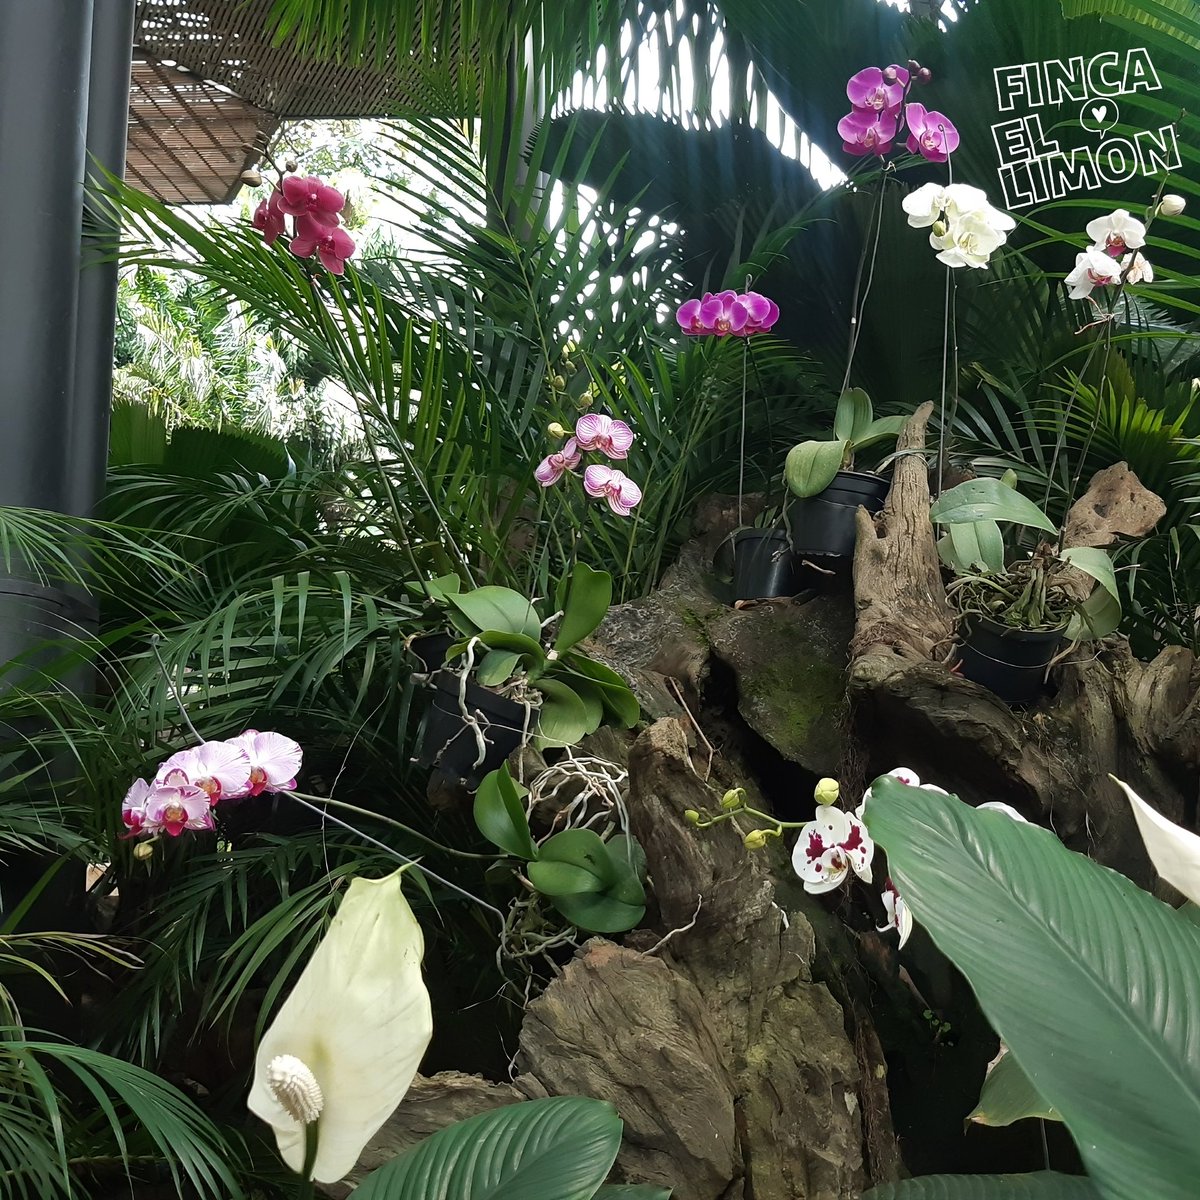 #fincalemon #orchid #orchids #orchidee #orchidea #蘭 #orchidlover #Orchideen #orchidaceae #orchidworld #orchidstagram #orchidlove #orchidshare #OrchidLovers #orchidflower #orchide #orchidspecies #orchidbeauty #orchidoftheday #orchidfan #orchidsinbloom #orchideas #orchidflowers